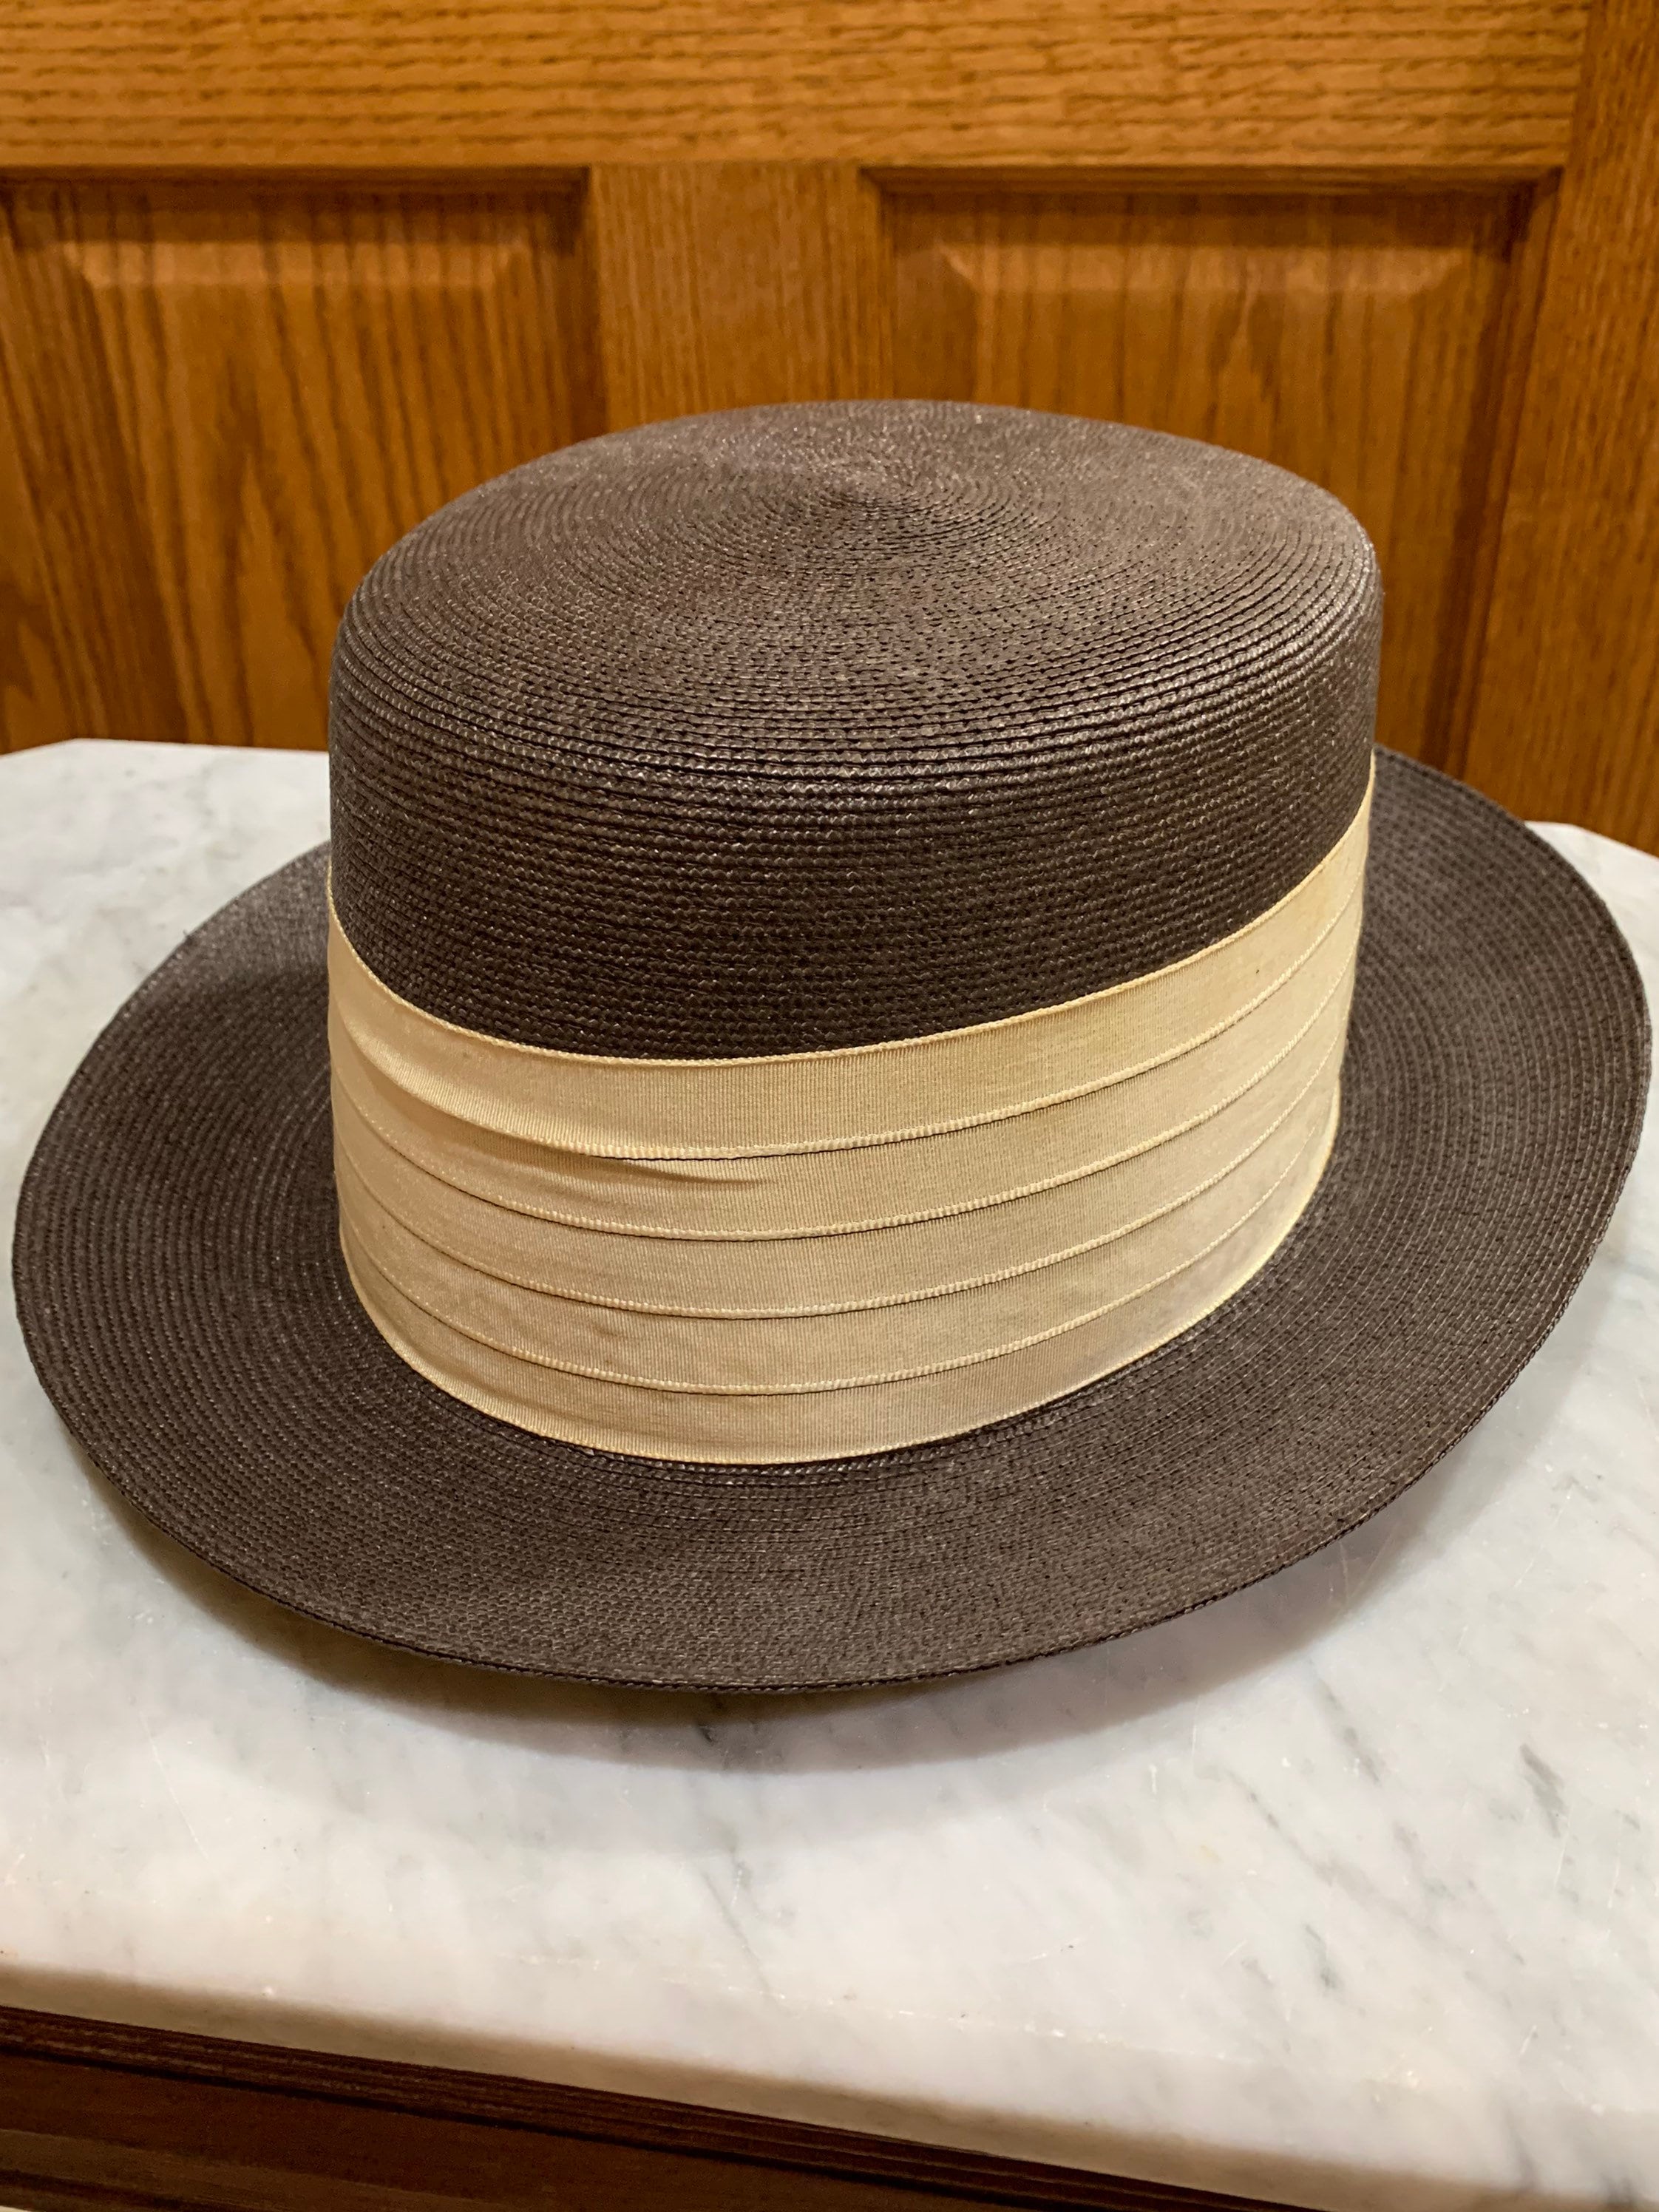 Miniature Recreation of Vintage Beaumont and Fletcher Hat Box [BSM 30239]